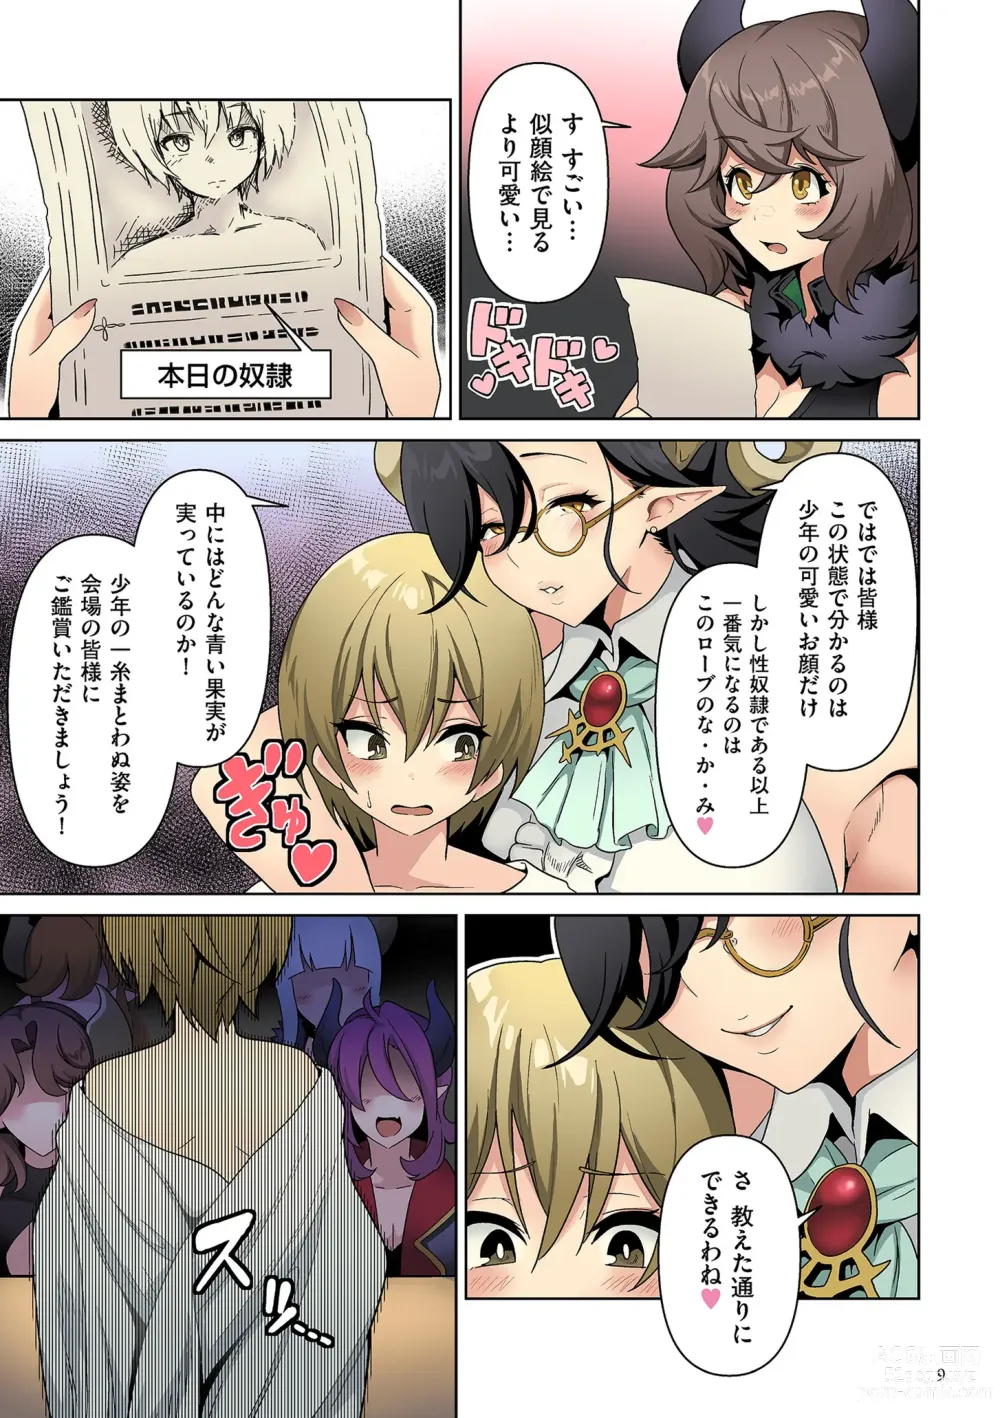 Page 9 of manga Succubus Kingdom